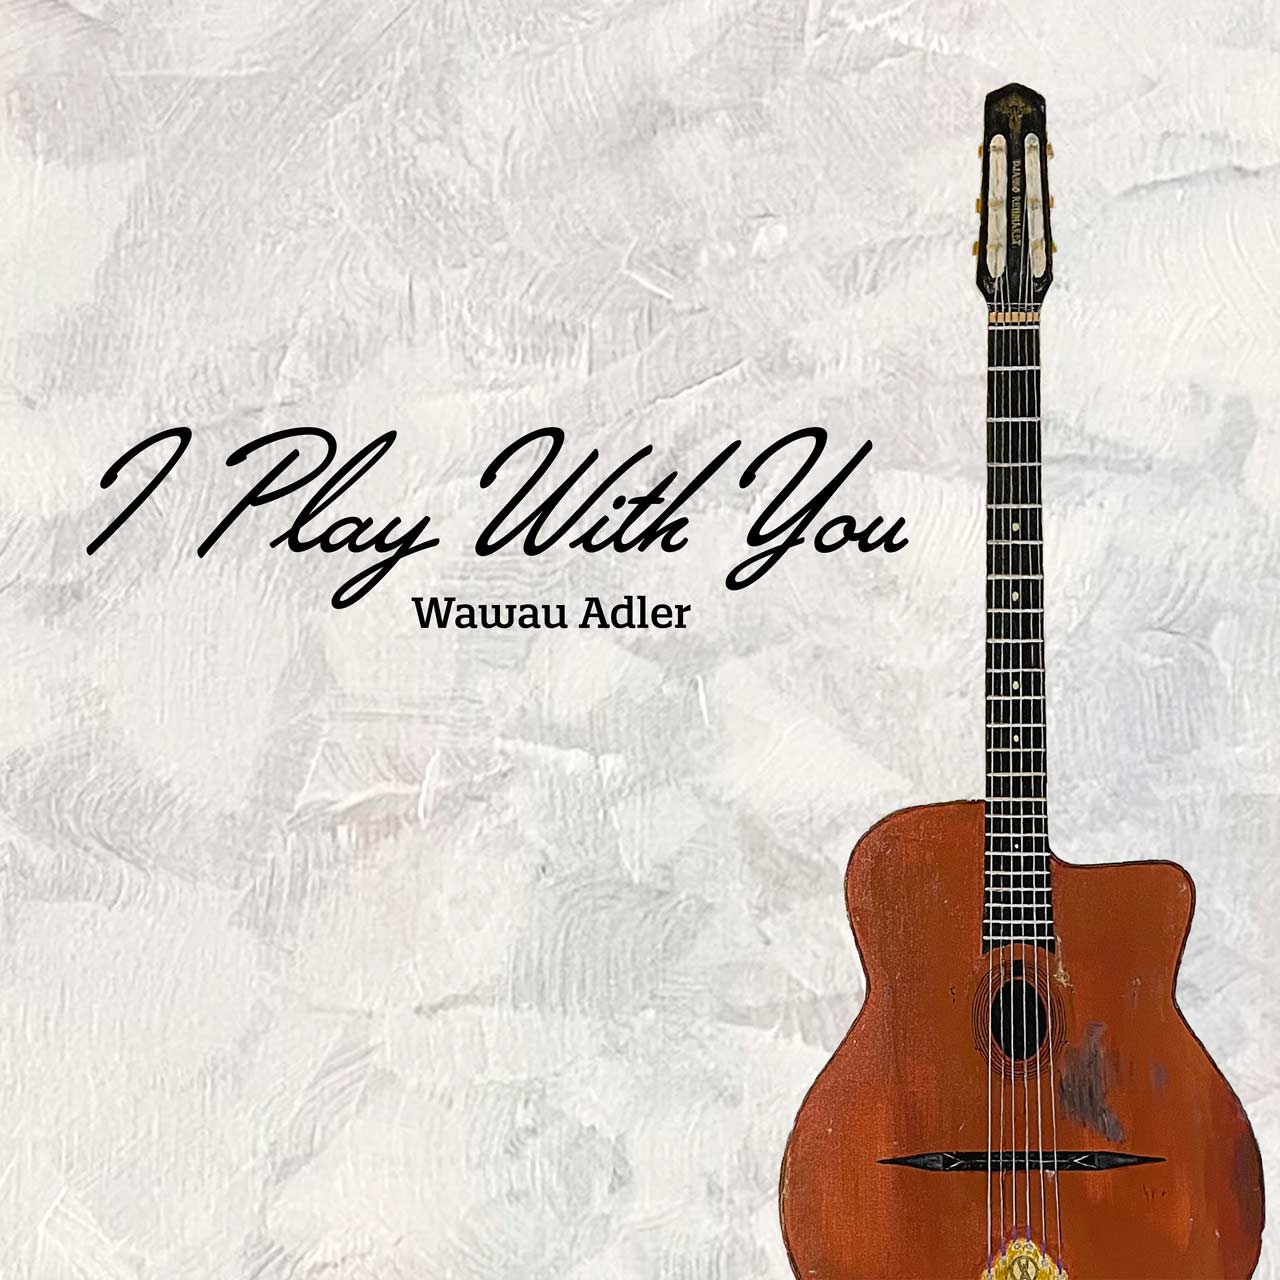 Wawau Adler CD Album I Play With You - Cover